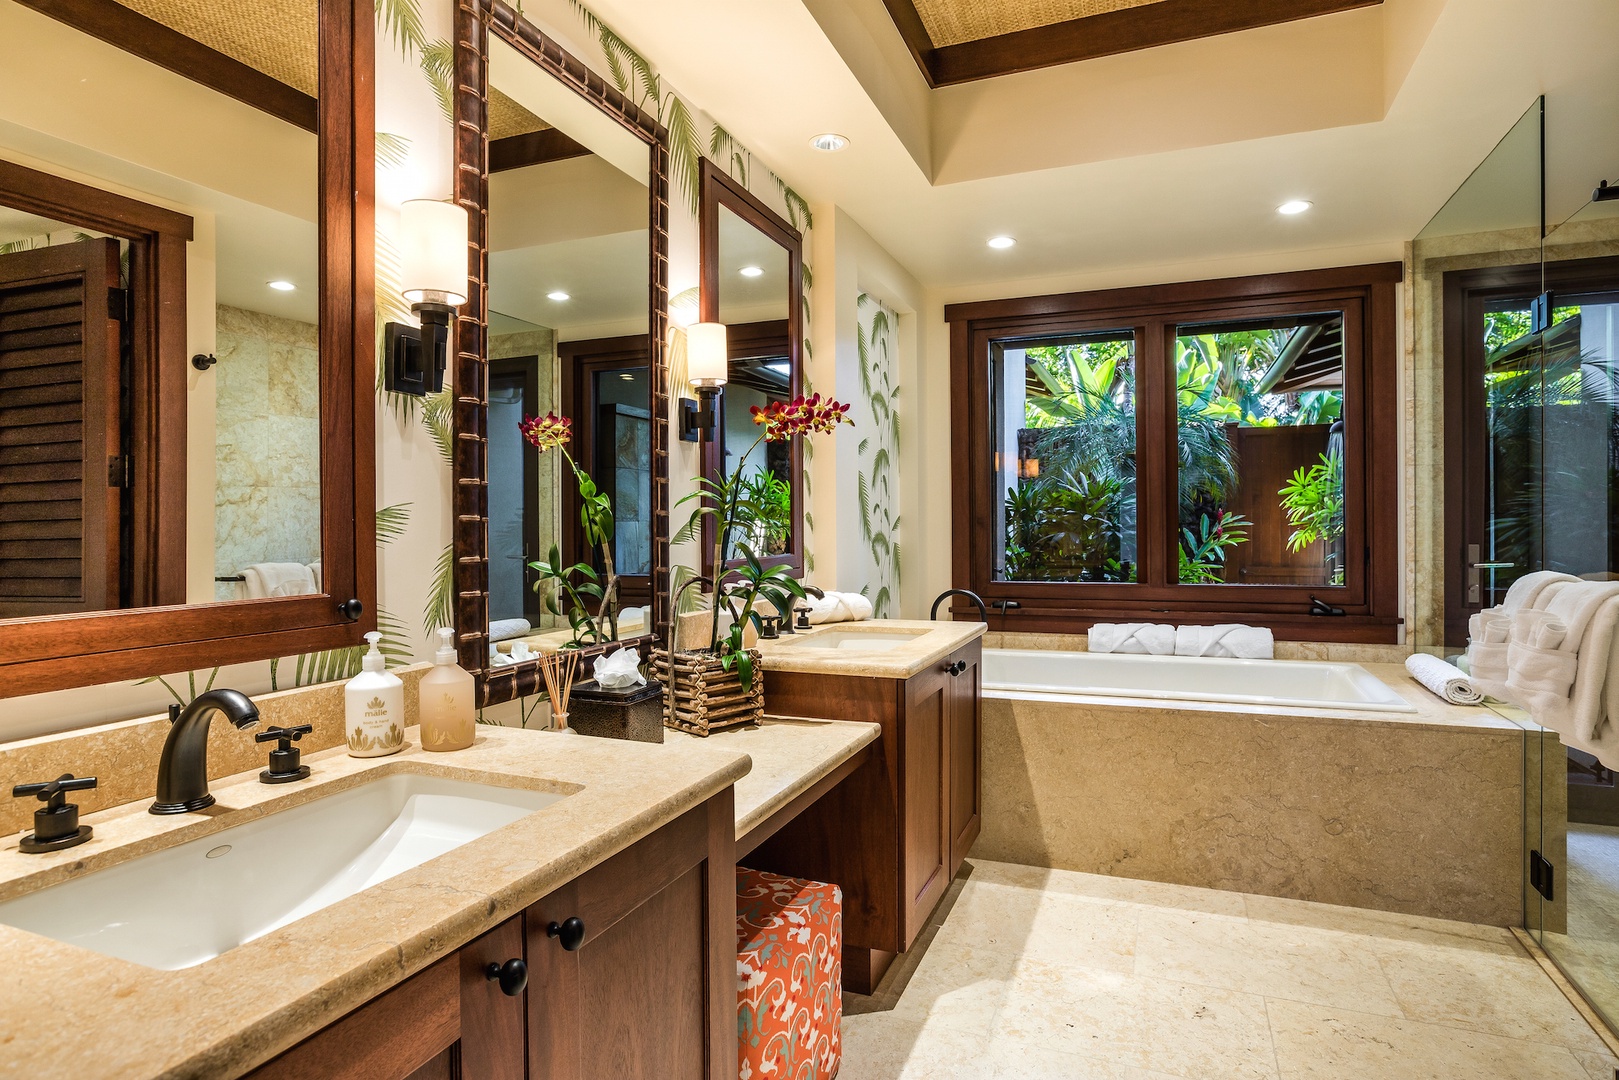 Kailua Kona Vacation Rentals, 2BD Hali'ipua Villa (108) at Four Seasons Resort at Hualalai - Spacious and elegant primary bathroom with double vanity.